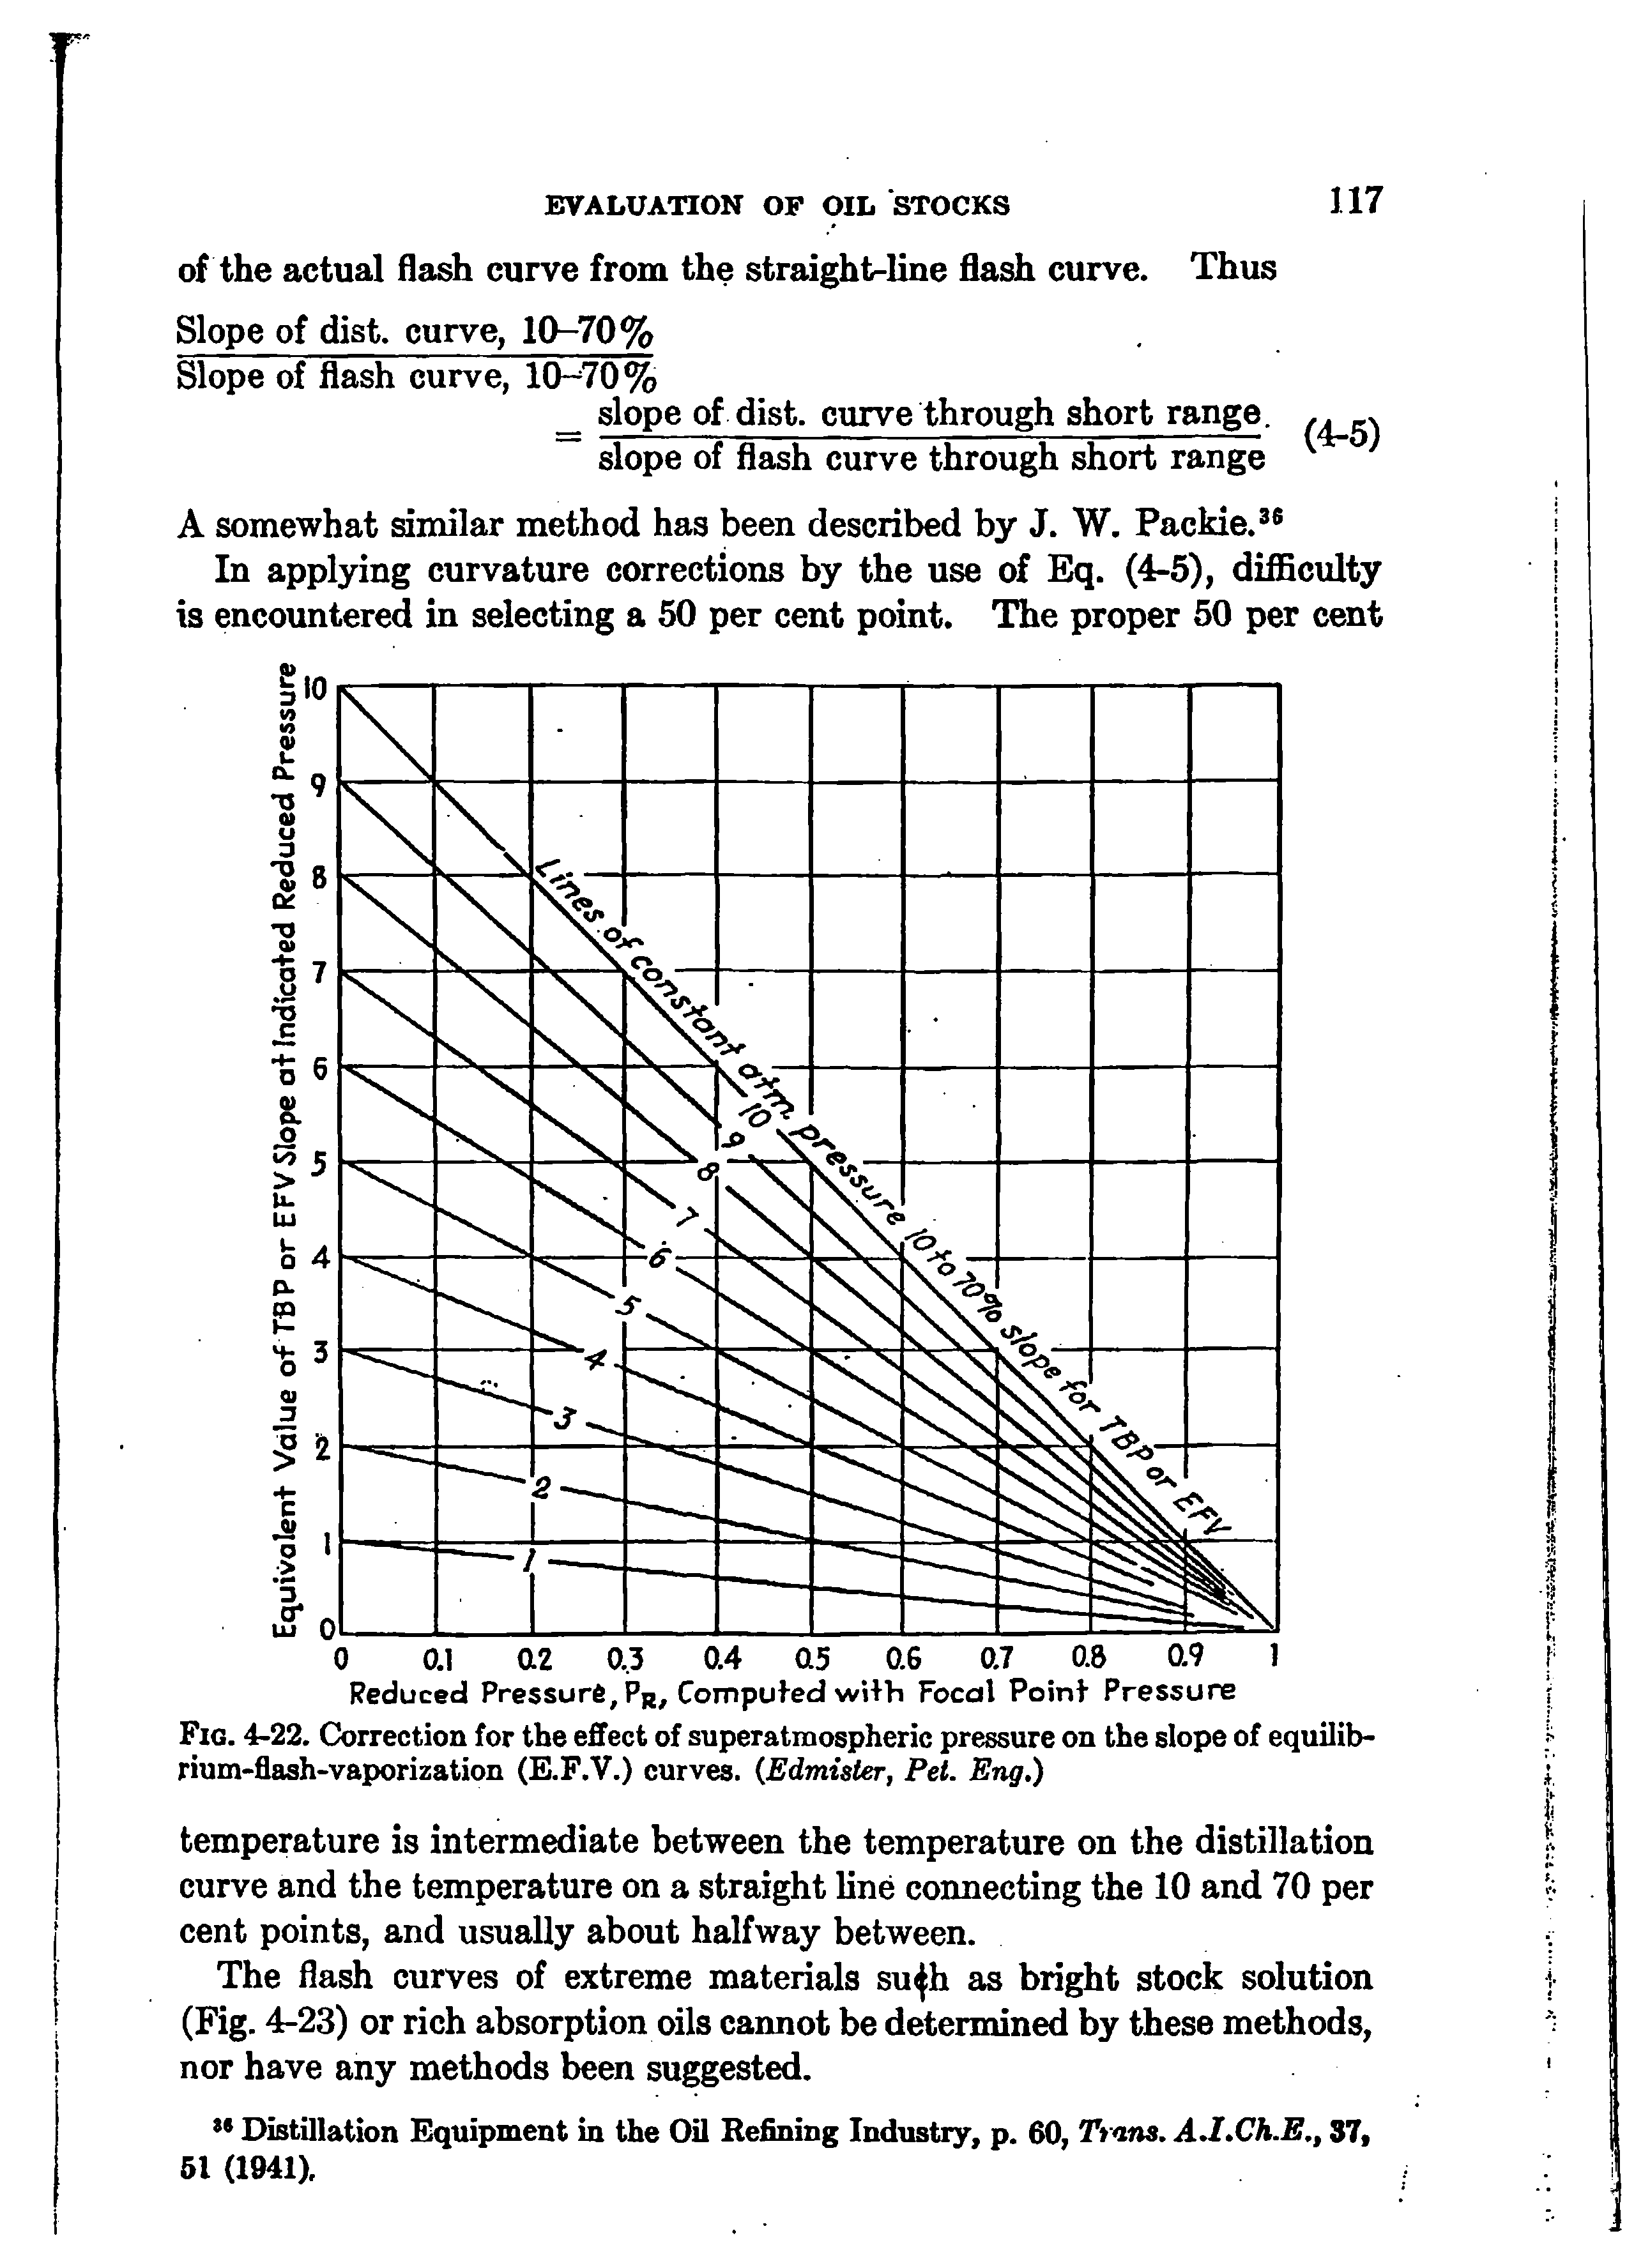 Fig. 4-22. Correction for the effect of superatmospheric pressure on the slope of equilibrium-flash-vaporization (E.F.V.) curves. Edmister, Pet. Eng.)...